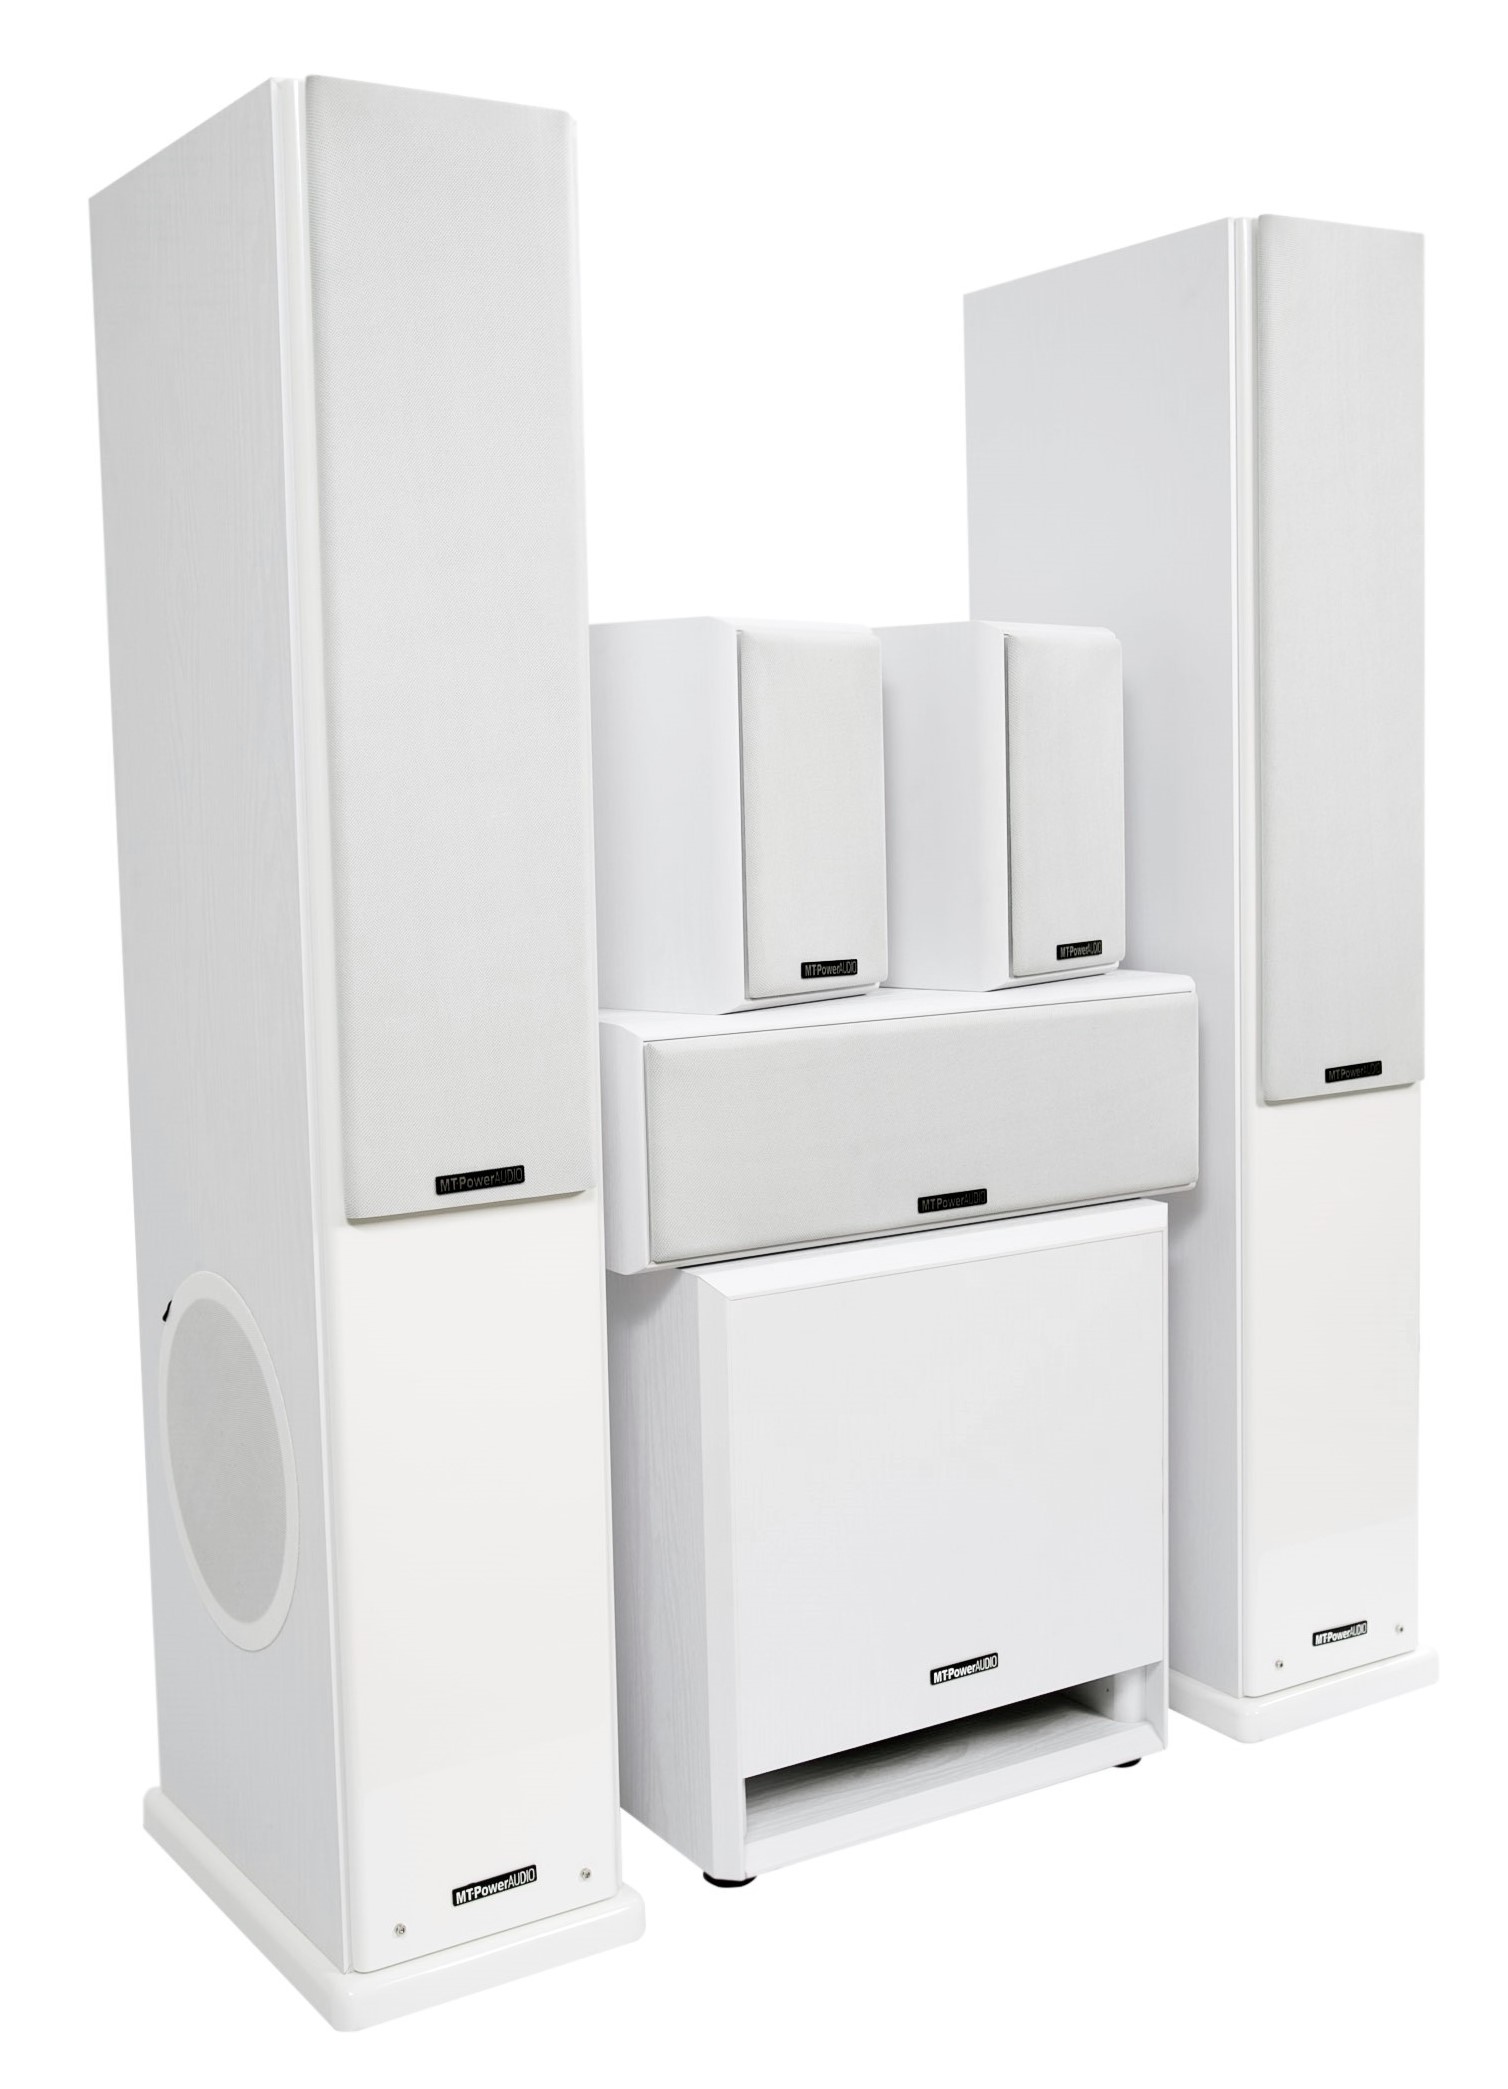 Комплекты акустики 5.1 MT-Power Elegance-2 white set 5.1 (white grills) комплекты акустики 5 1 mt power elegance 2 white set 5 1